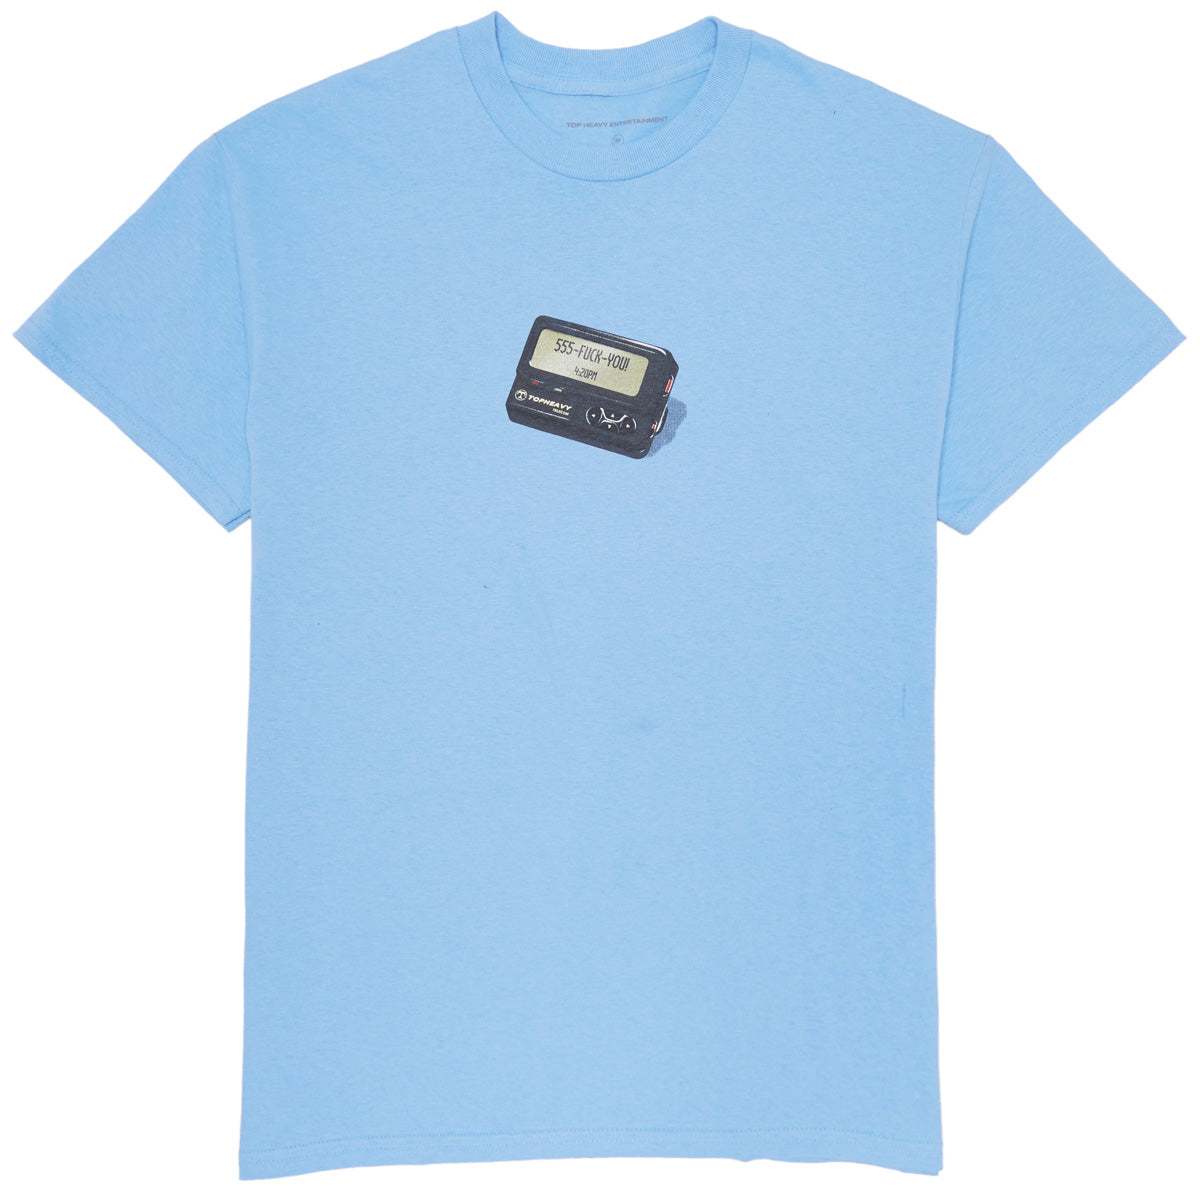 Top Heavy Beeper T-Shirt - Carolina Blue image 1